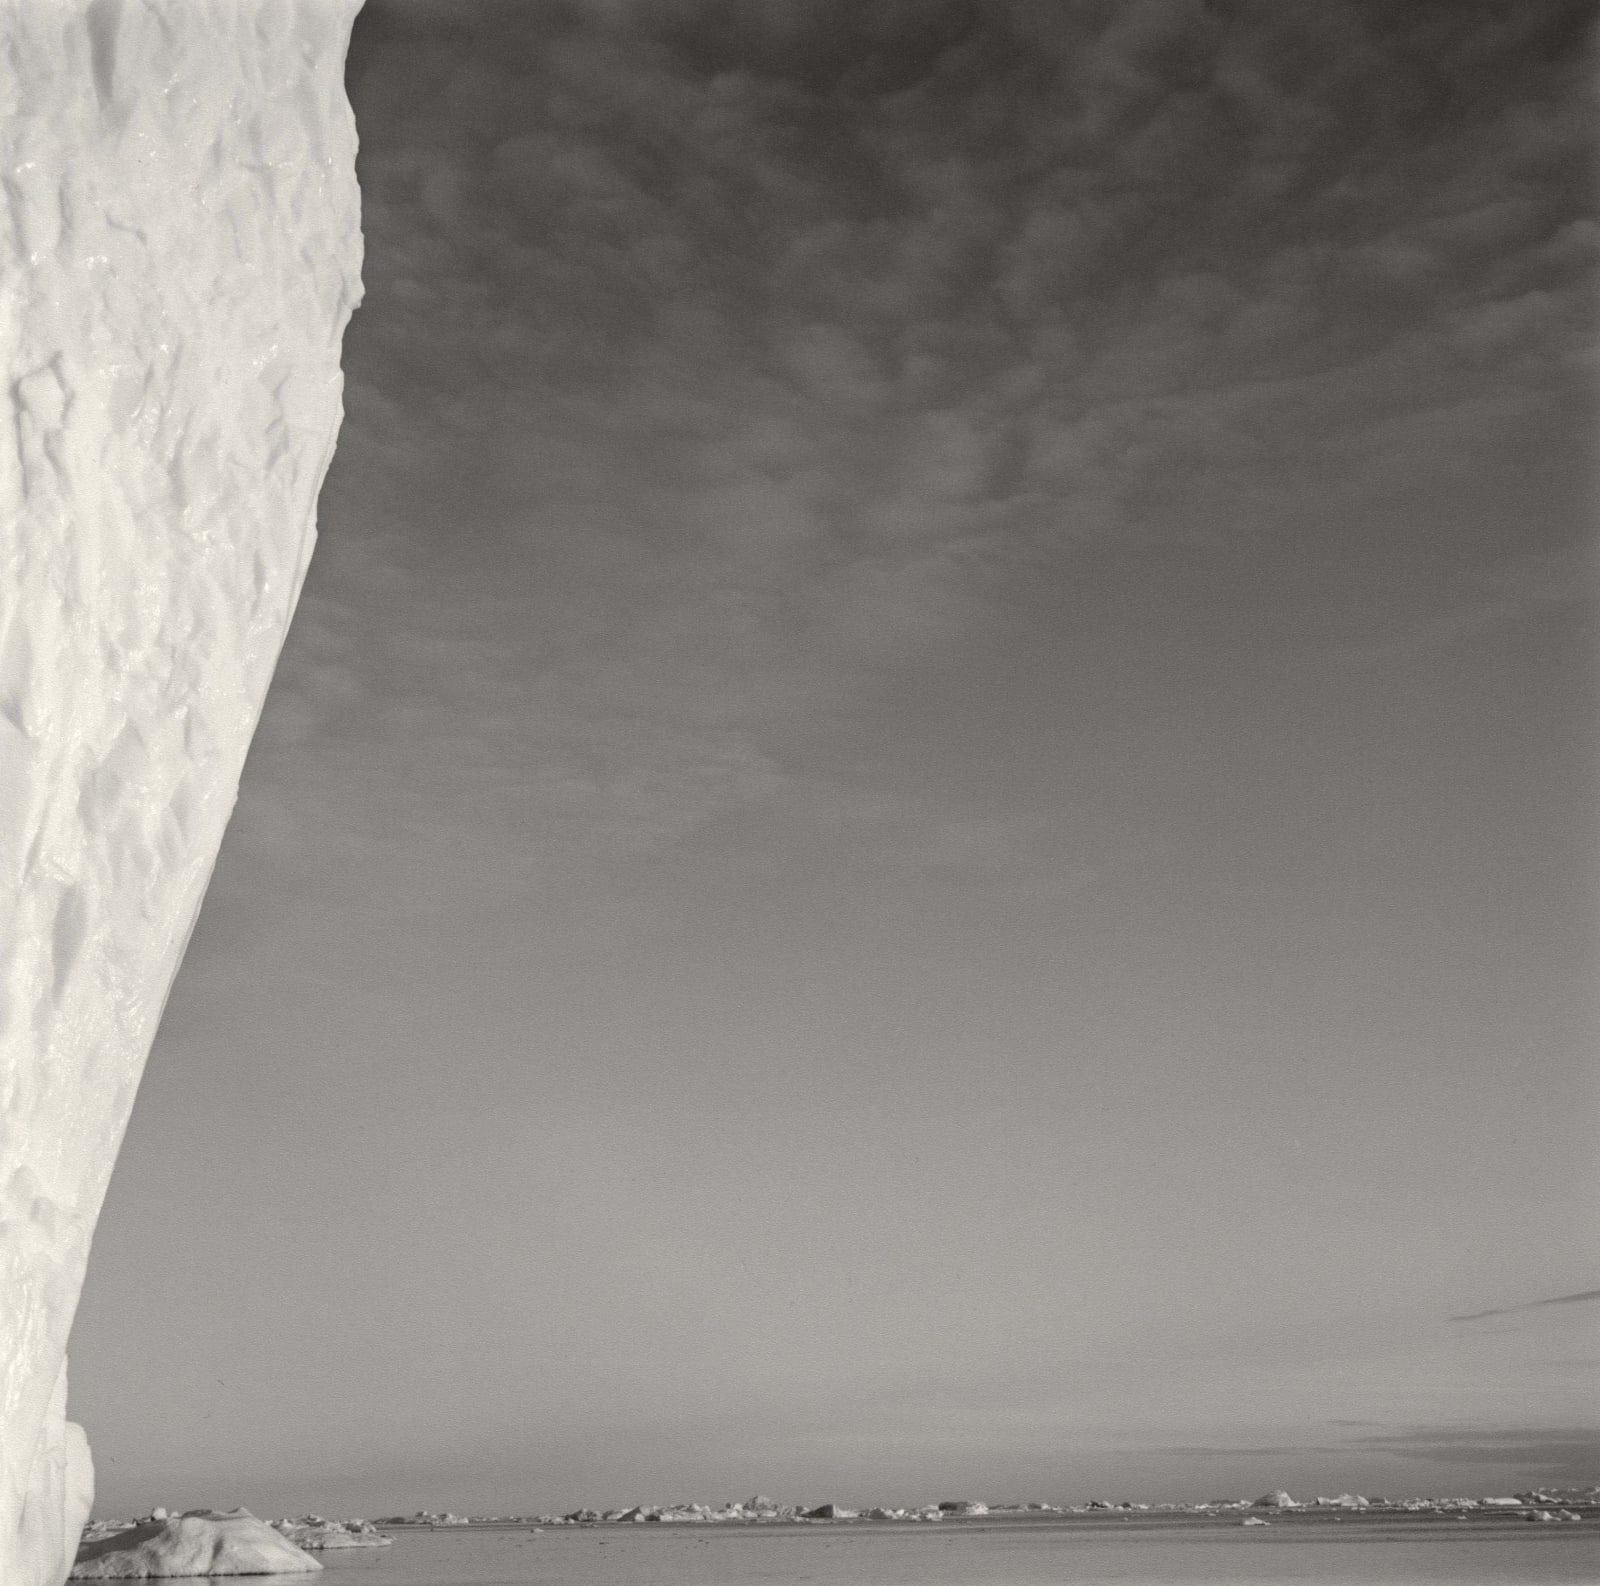 Lynn Davis, Iceberg #37, Disko Bay, Greenland, 2000